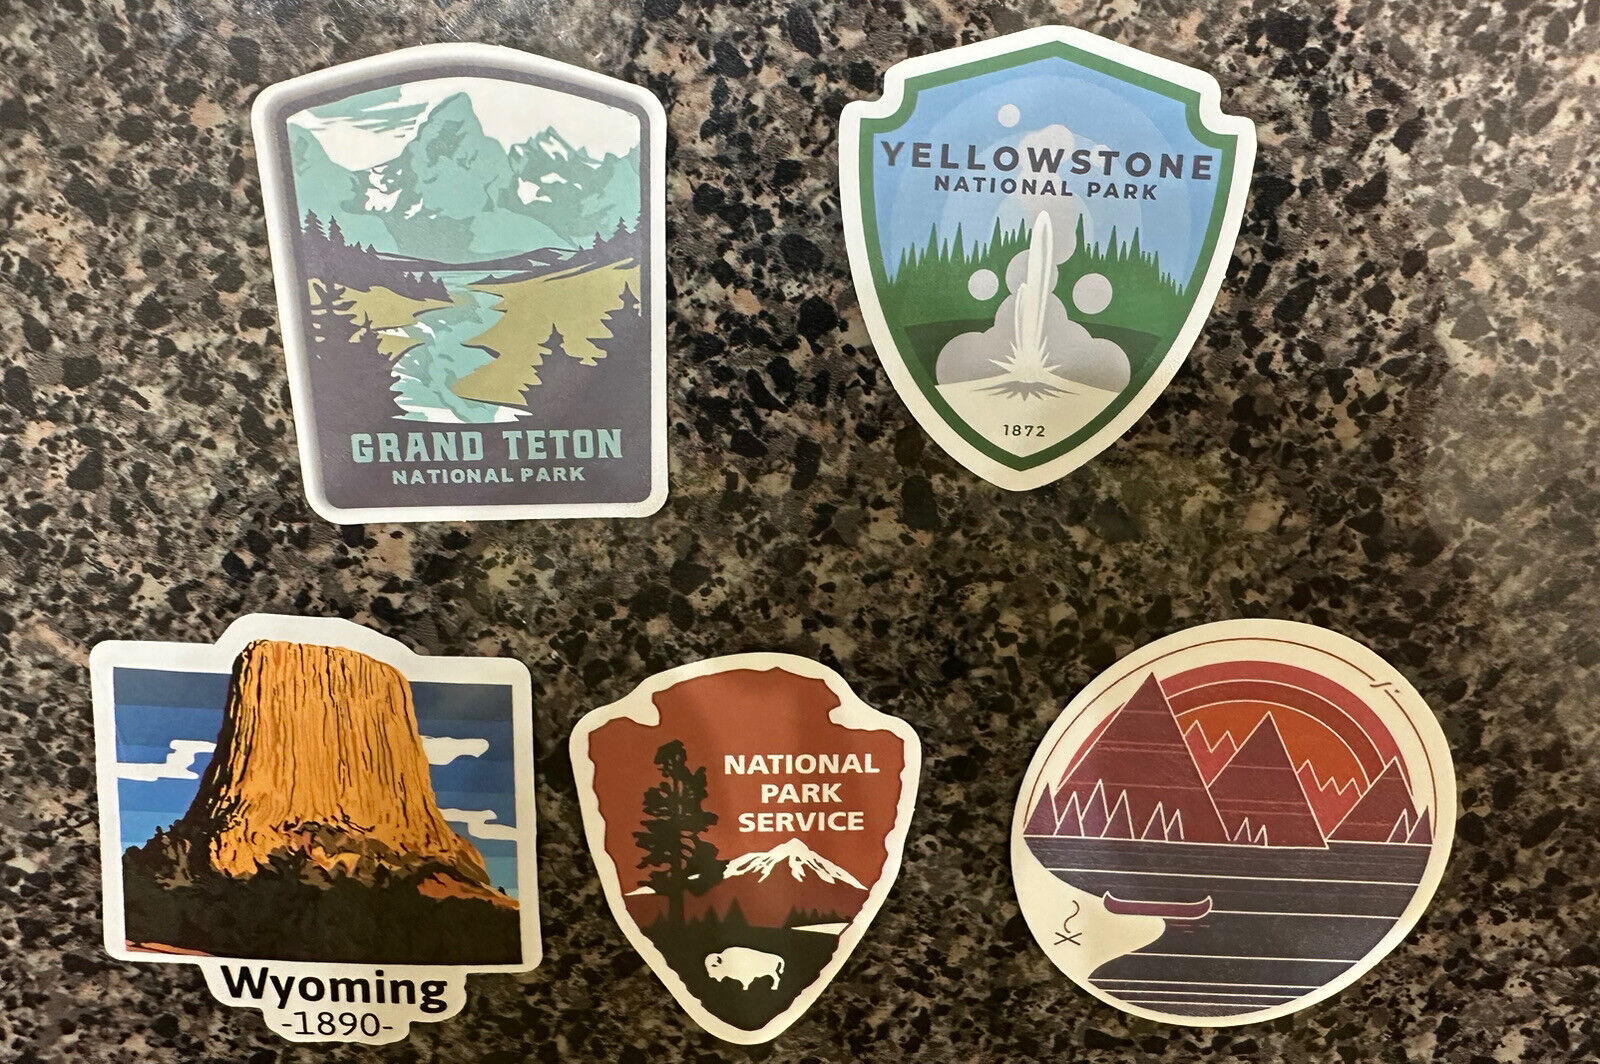 A set of Five (5) Yellowstone National Park/Grant Teton National Park